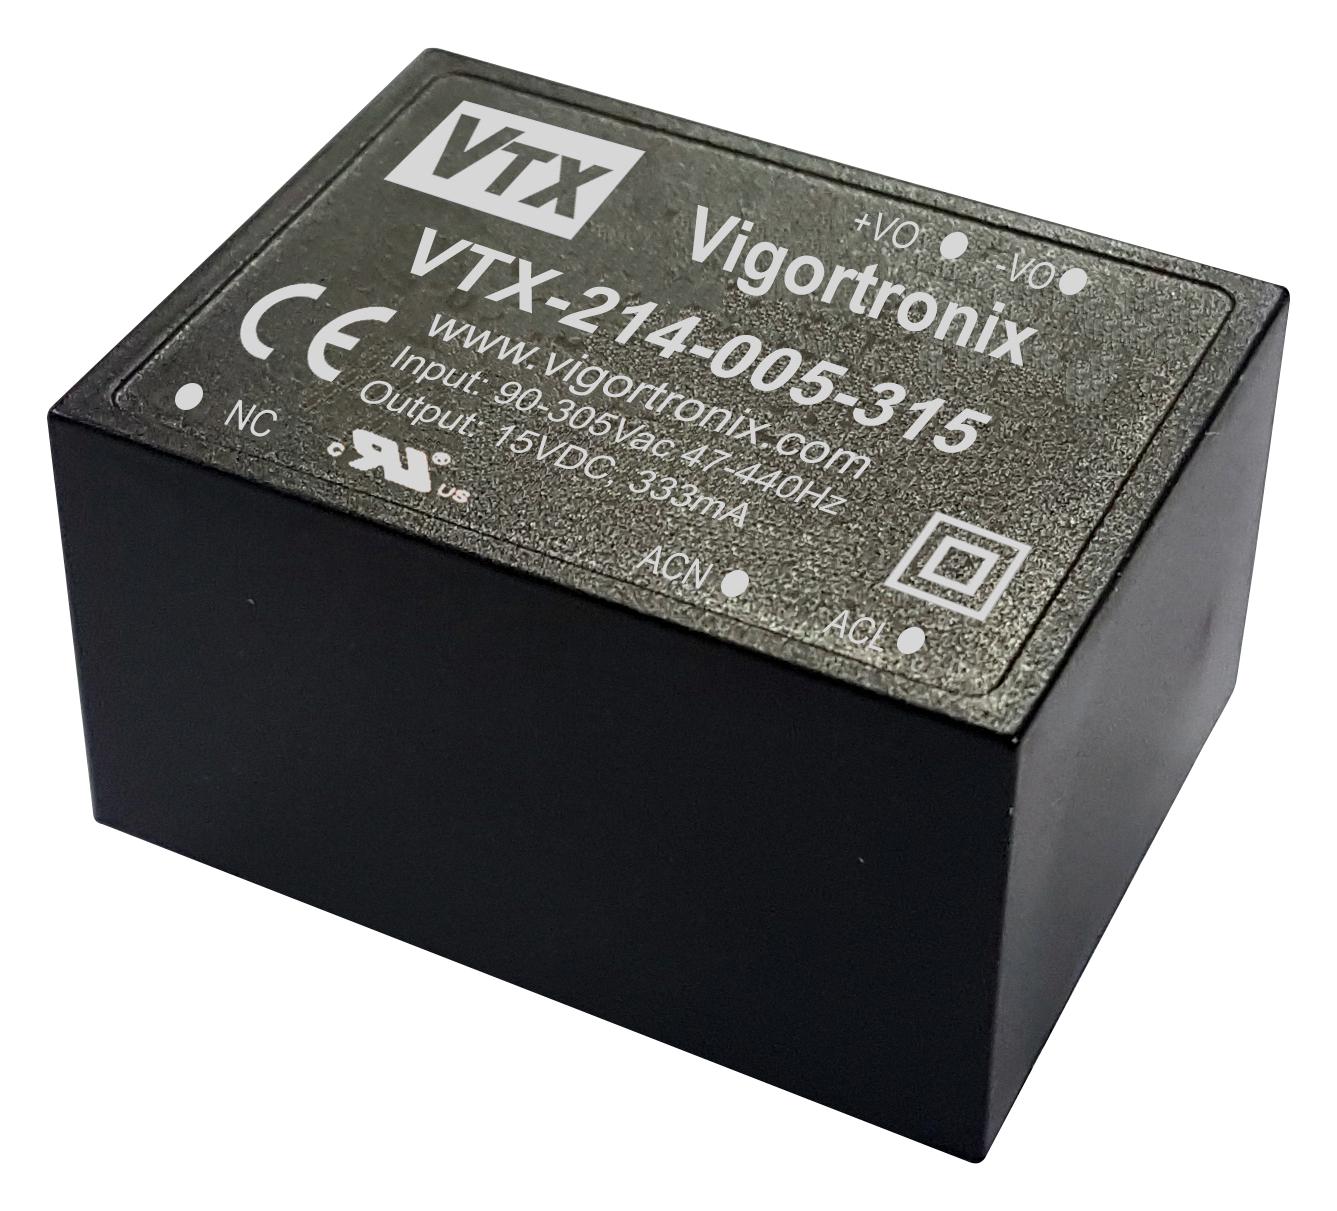 VTX-214-005-312